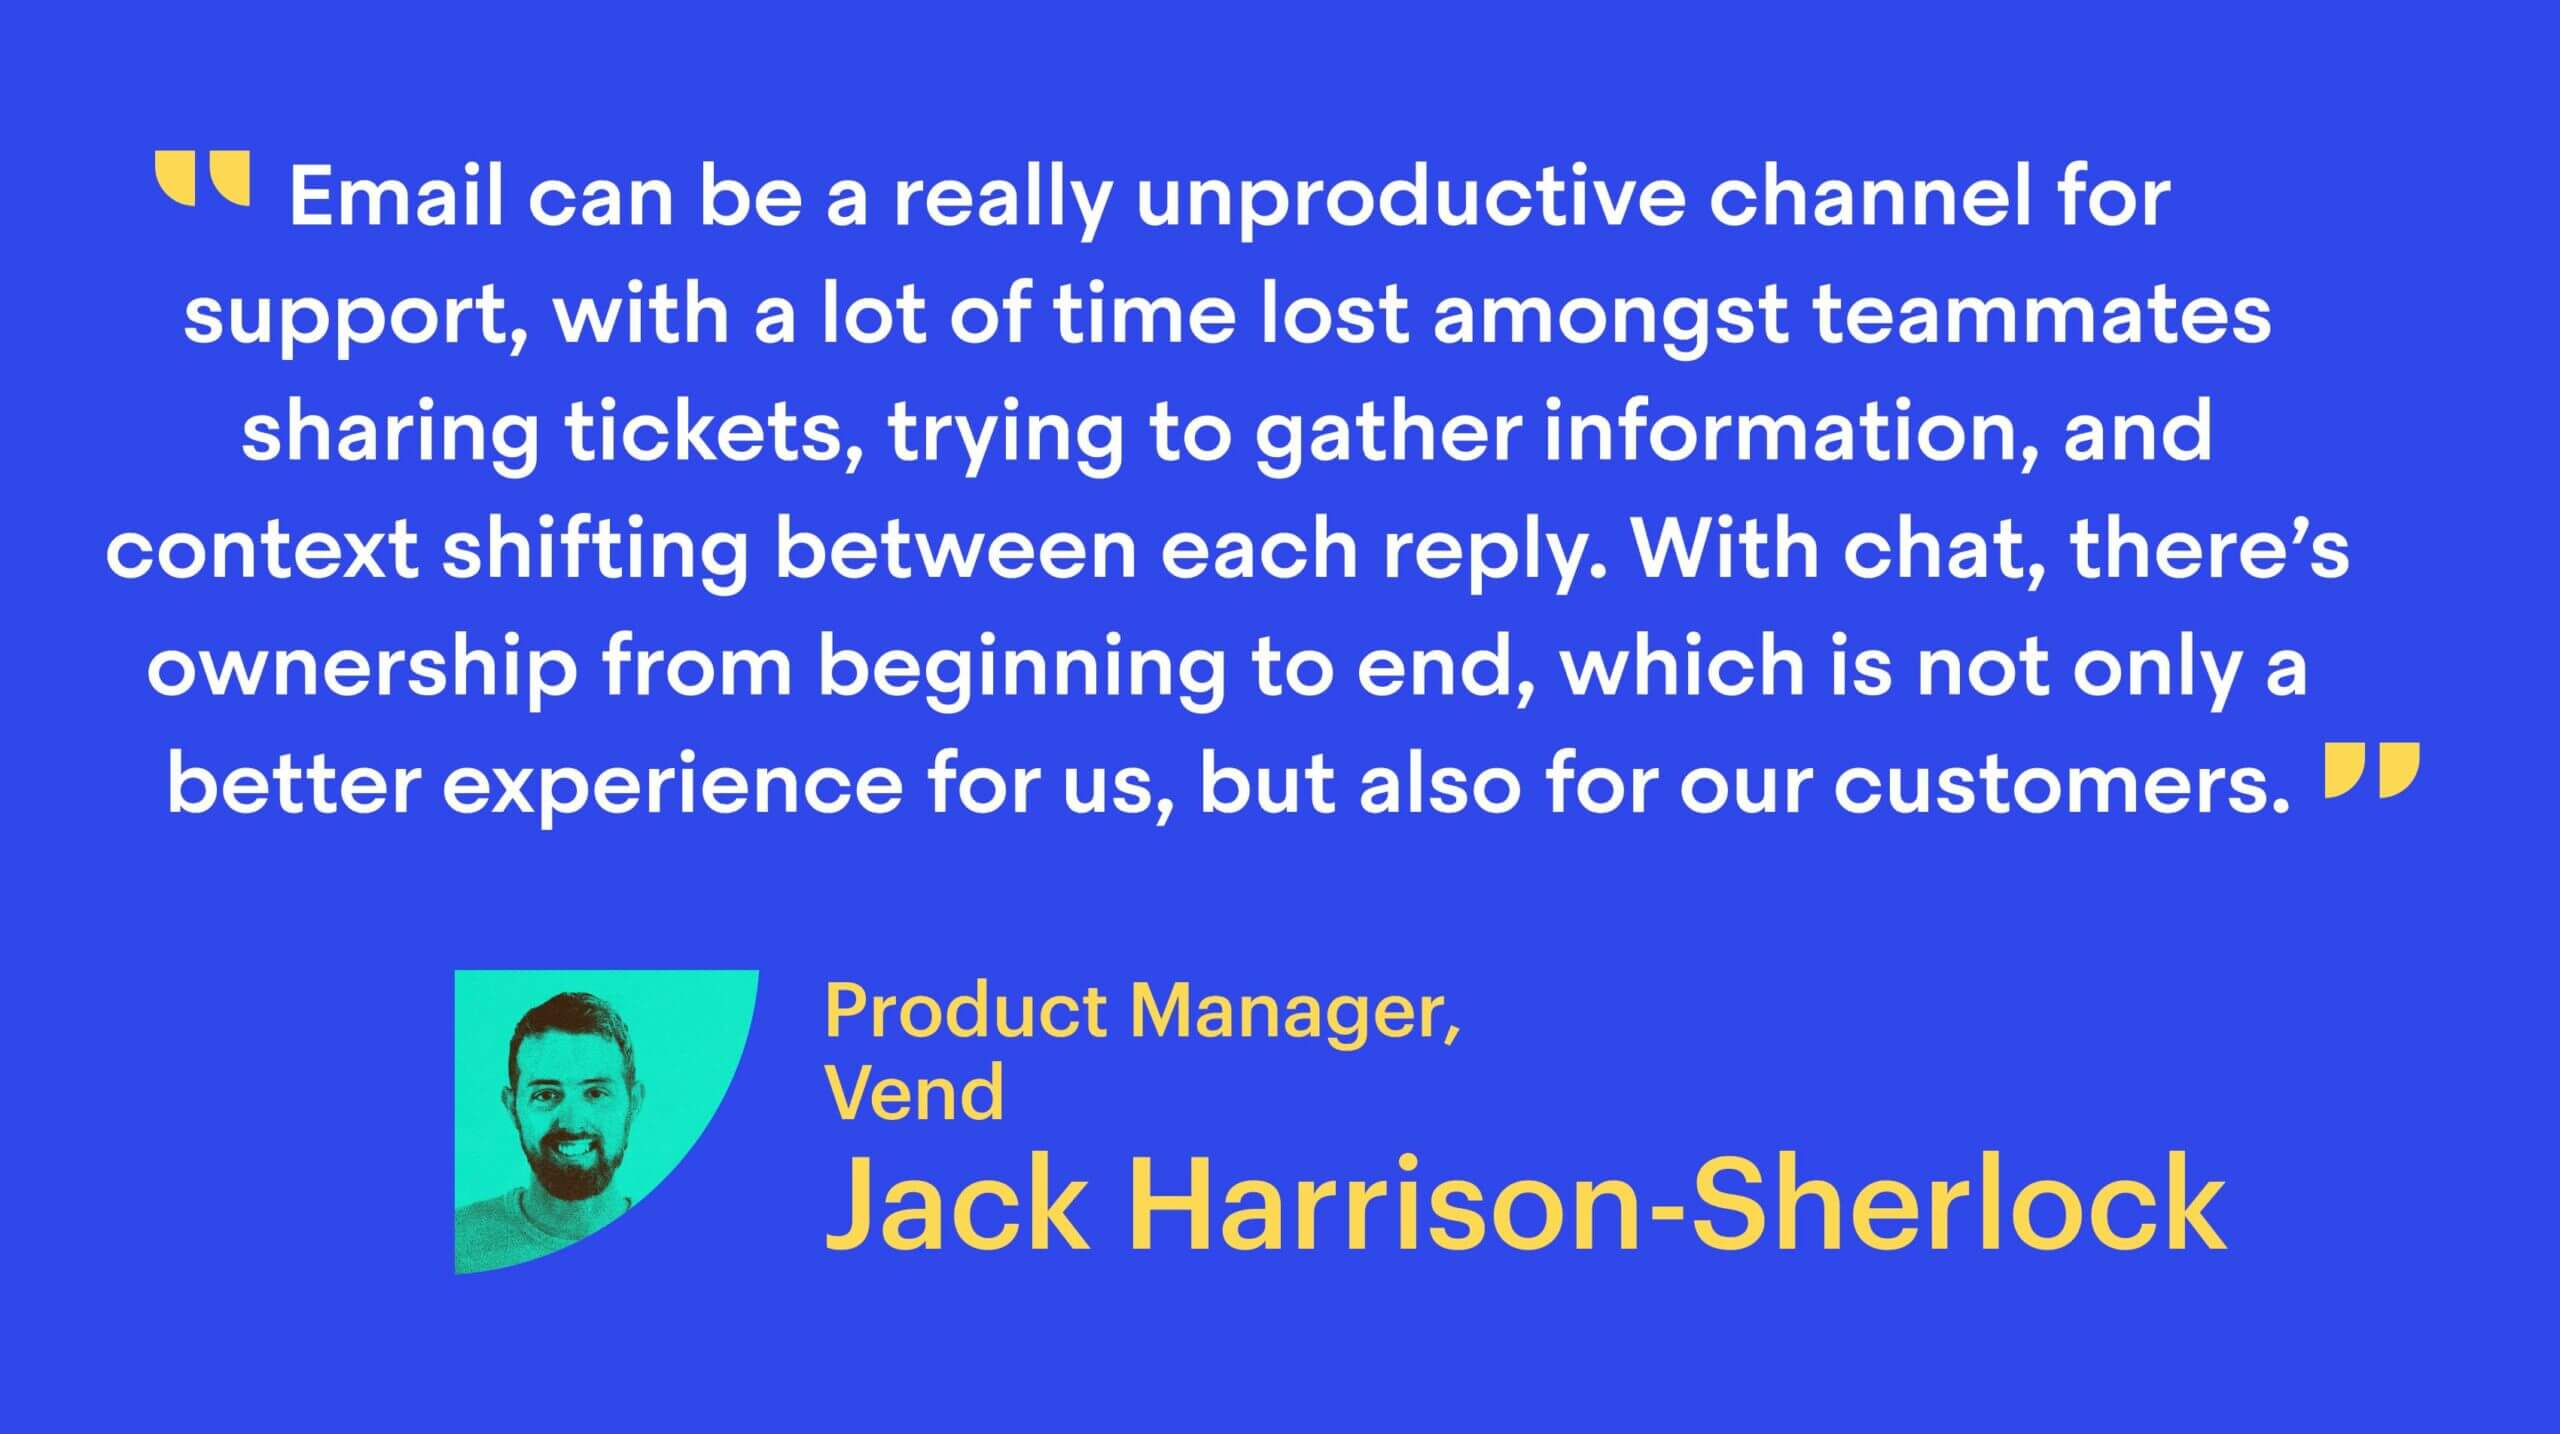 Jack Harrison-Sherlock, Product Manager at Vend